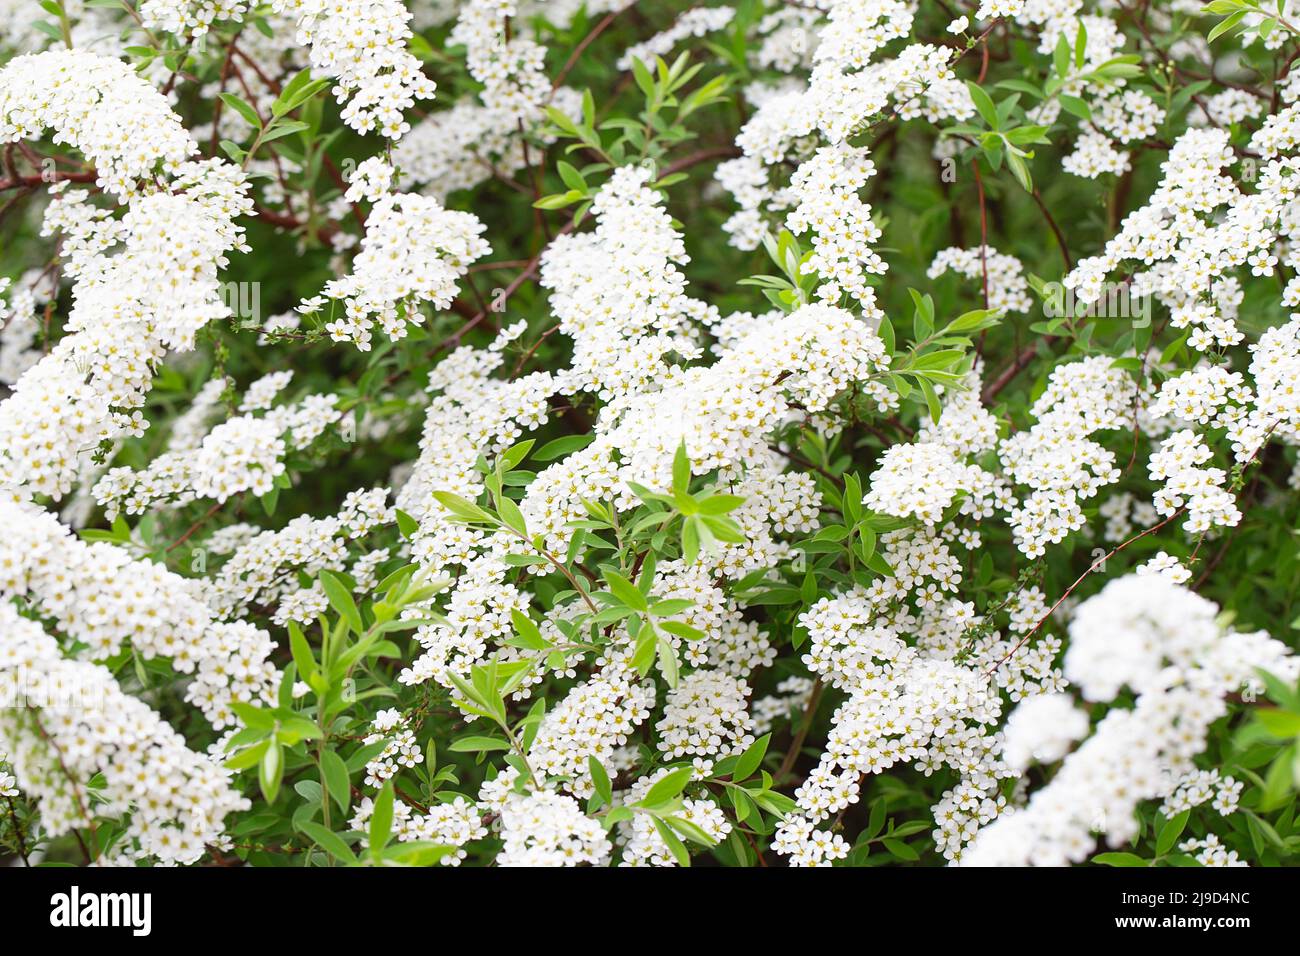 Blossom of Spirea nipponica Snowmound in springtime. White flowers of spirea in garden. Decorative flowering shrubs for landscape design. Spring flora Stock Photo